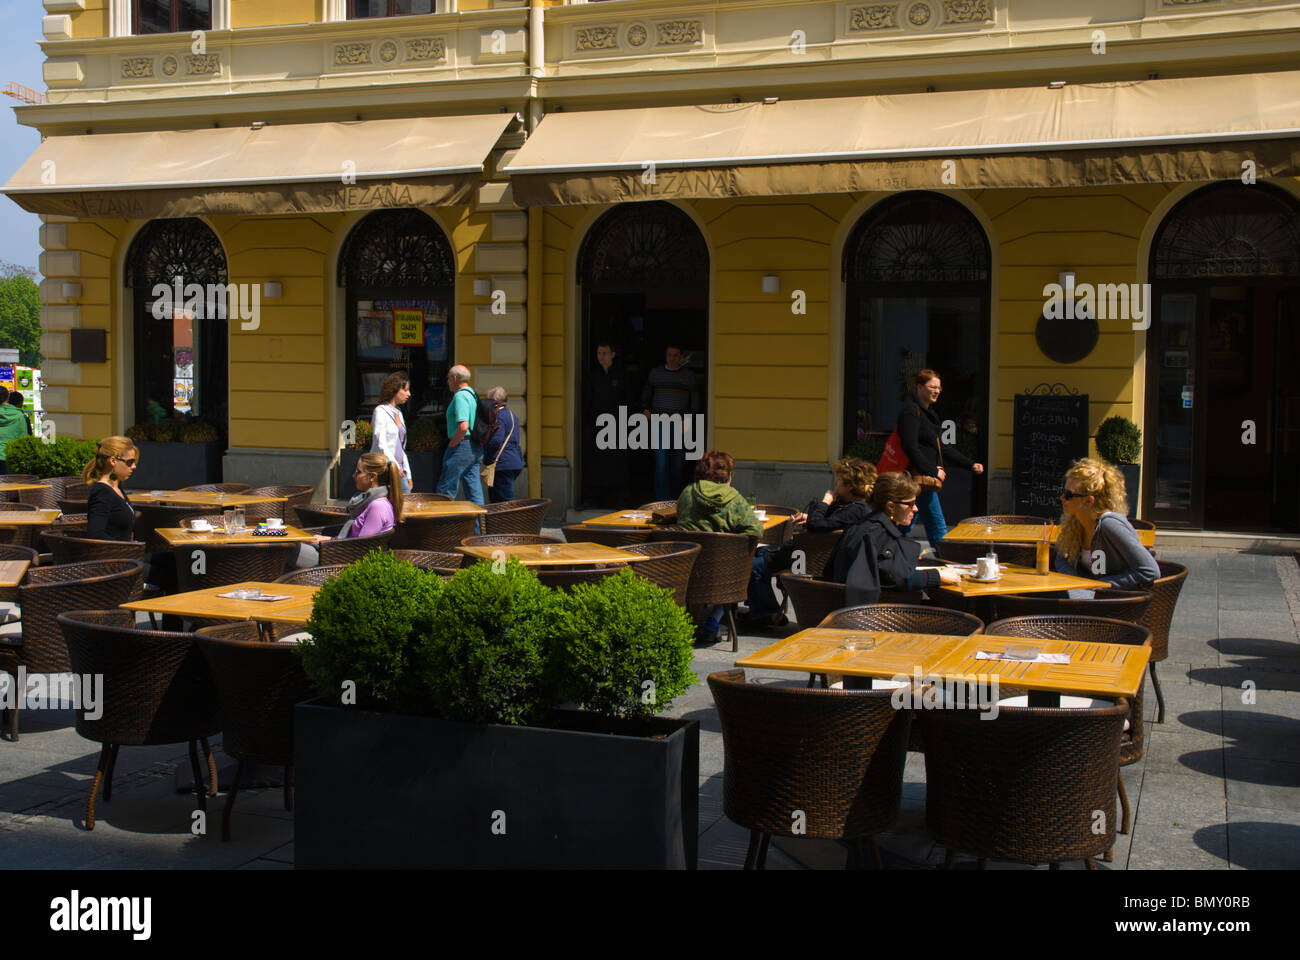 Cafe Terrasse entlang Knez Mihailova Fußgänger Straße Belgrad Serbien Mitteleuropa Stockfoto